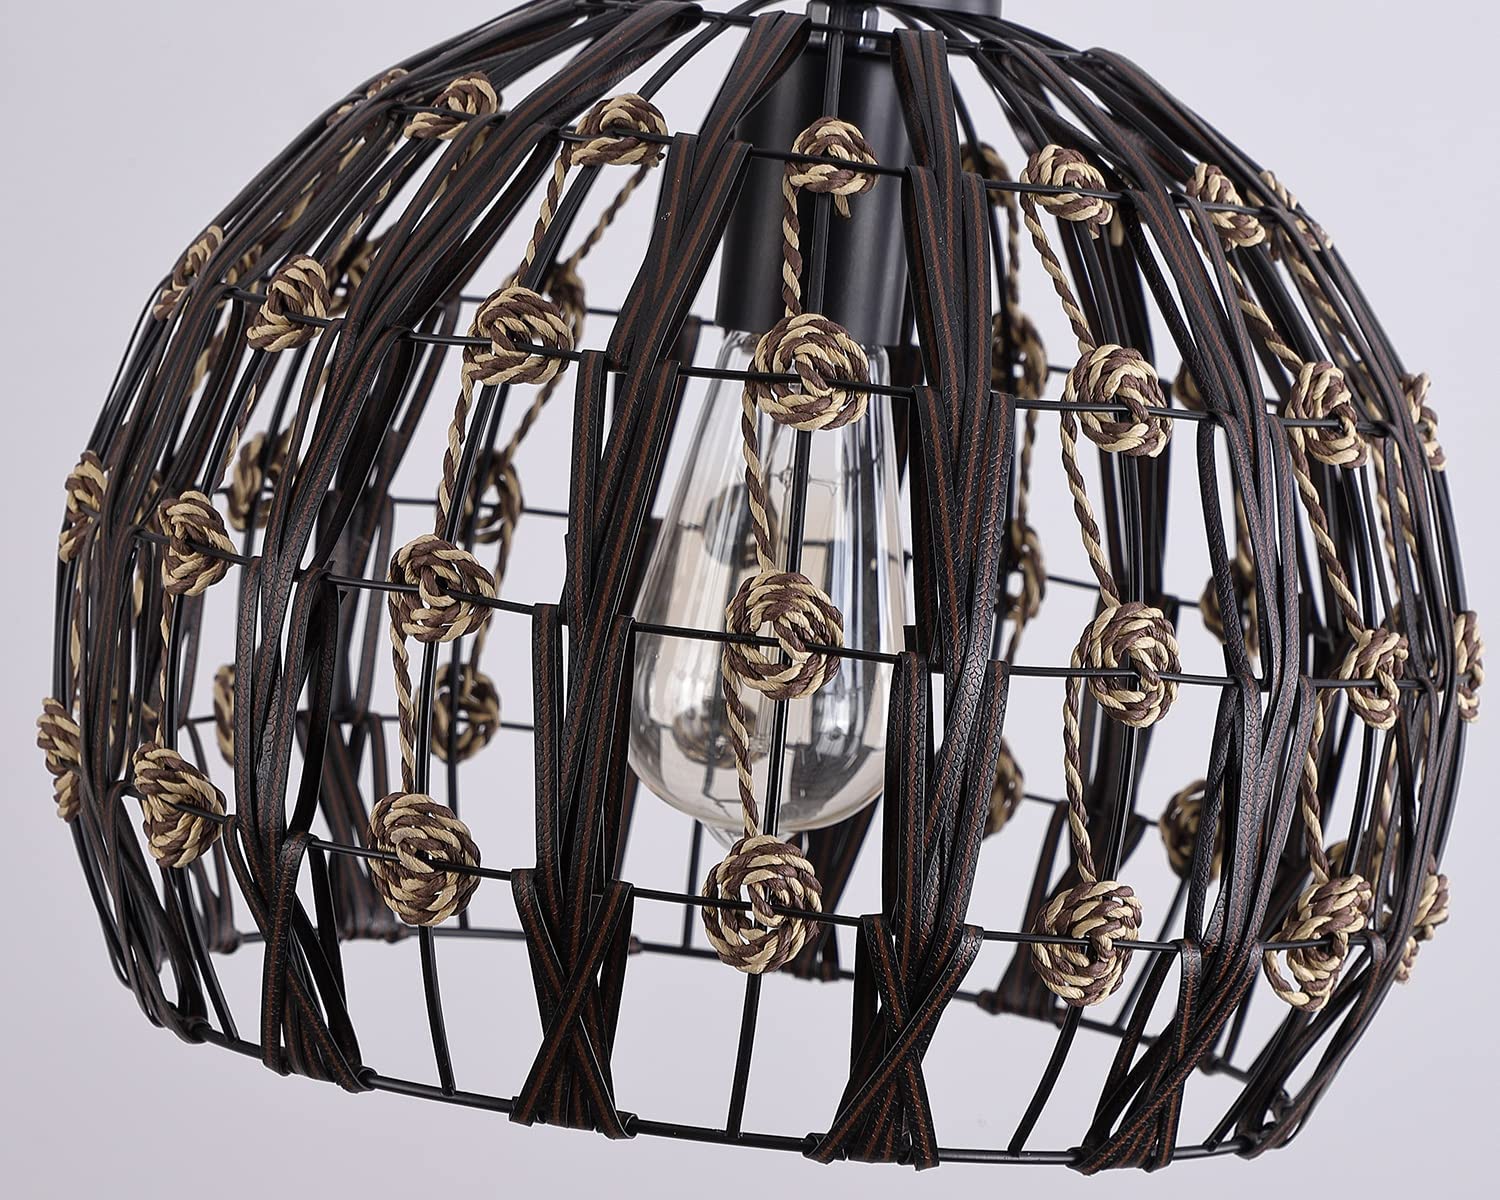 Rust basket pendant light vintage dome pendant lighting fixture for kitchen island